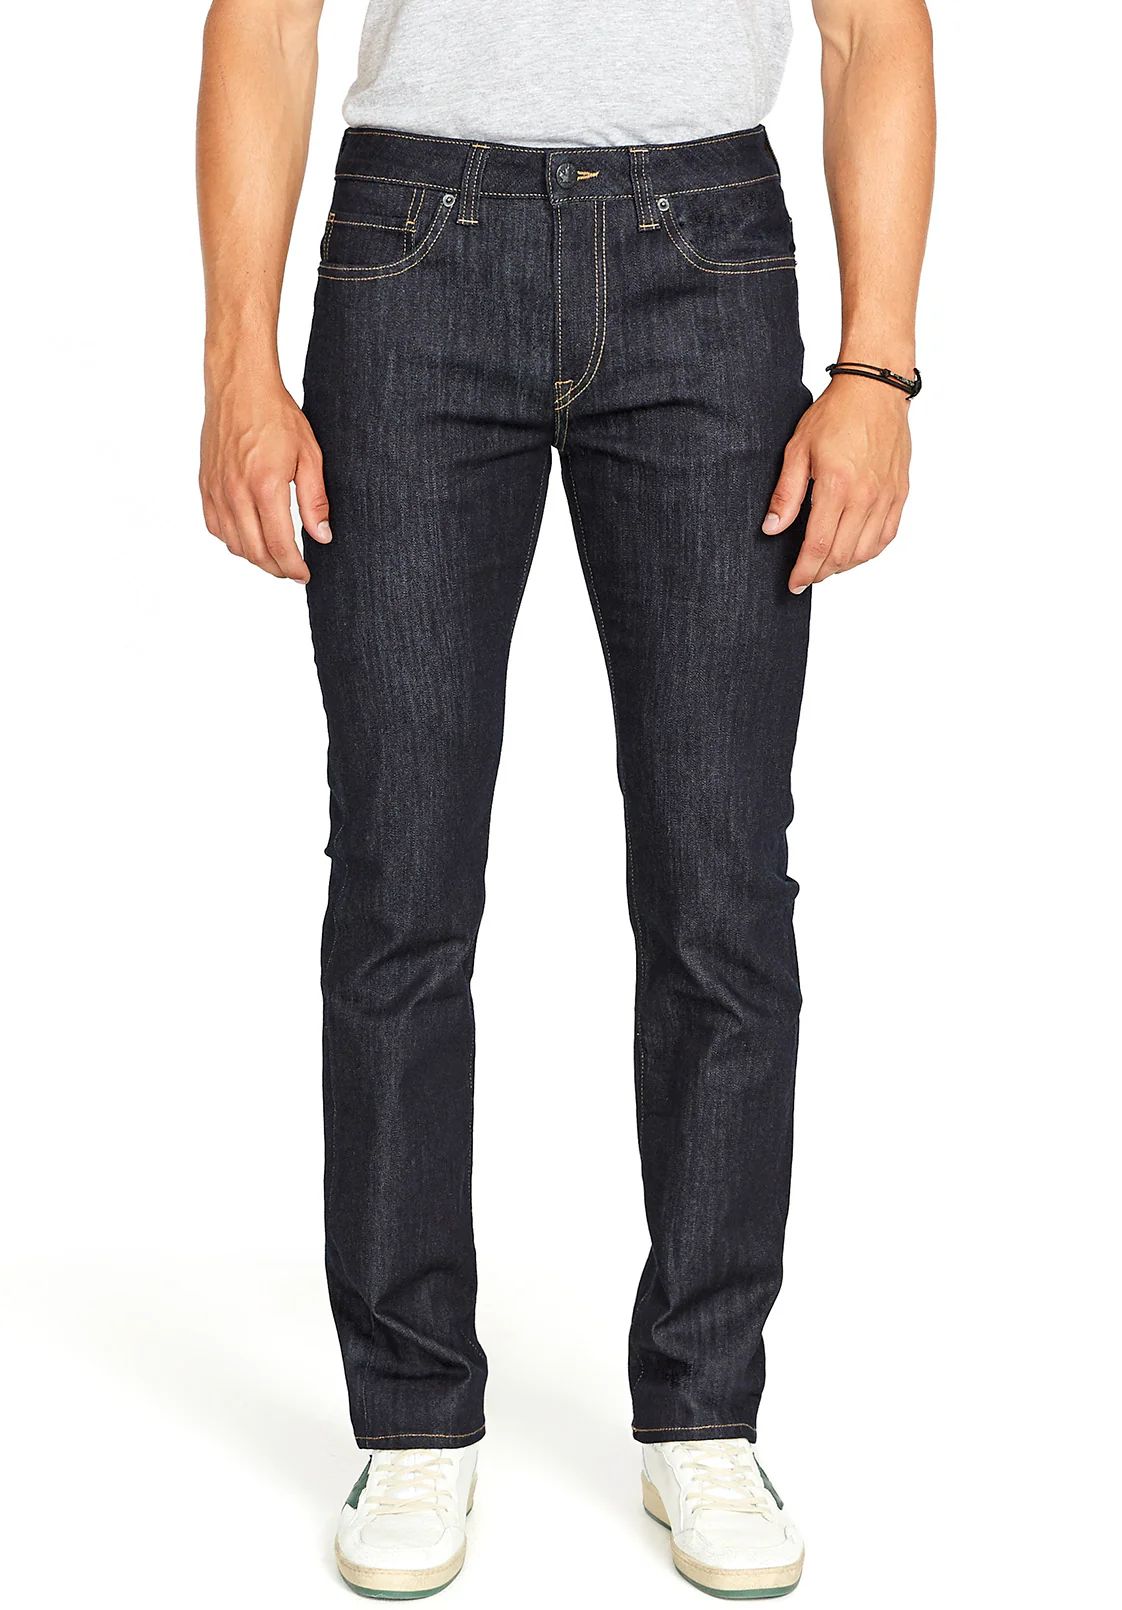 STRAIGHT SIX Rinsed Indigo Jeans - BM22630 | Buffalo David Bitton